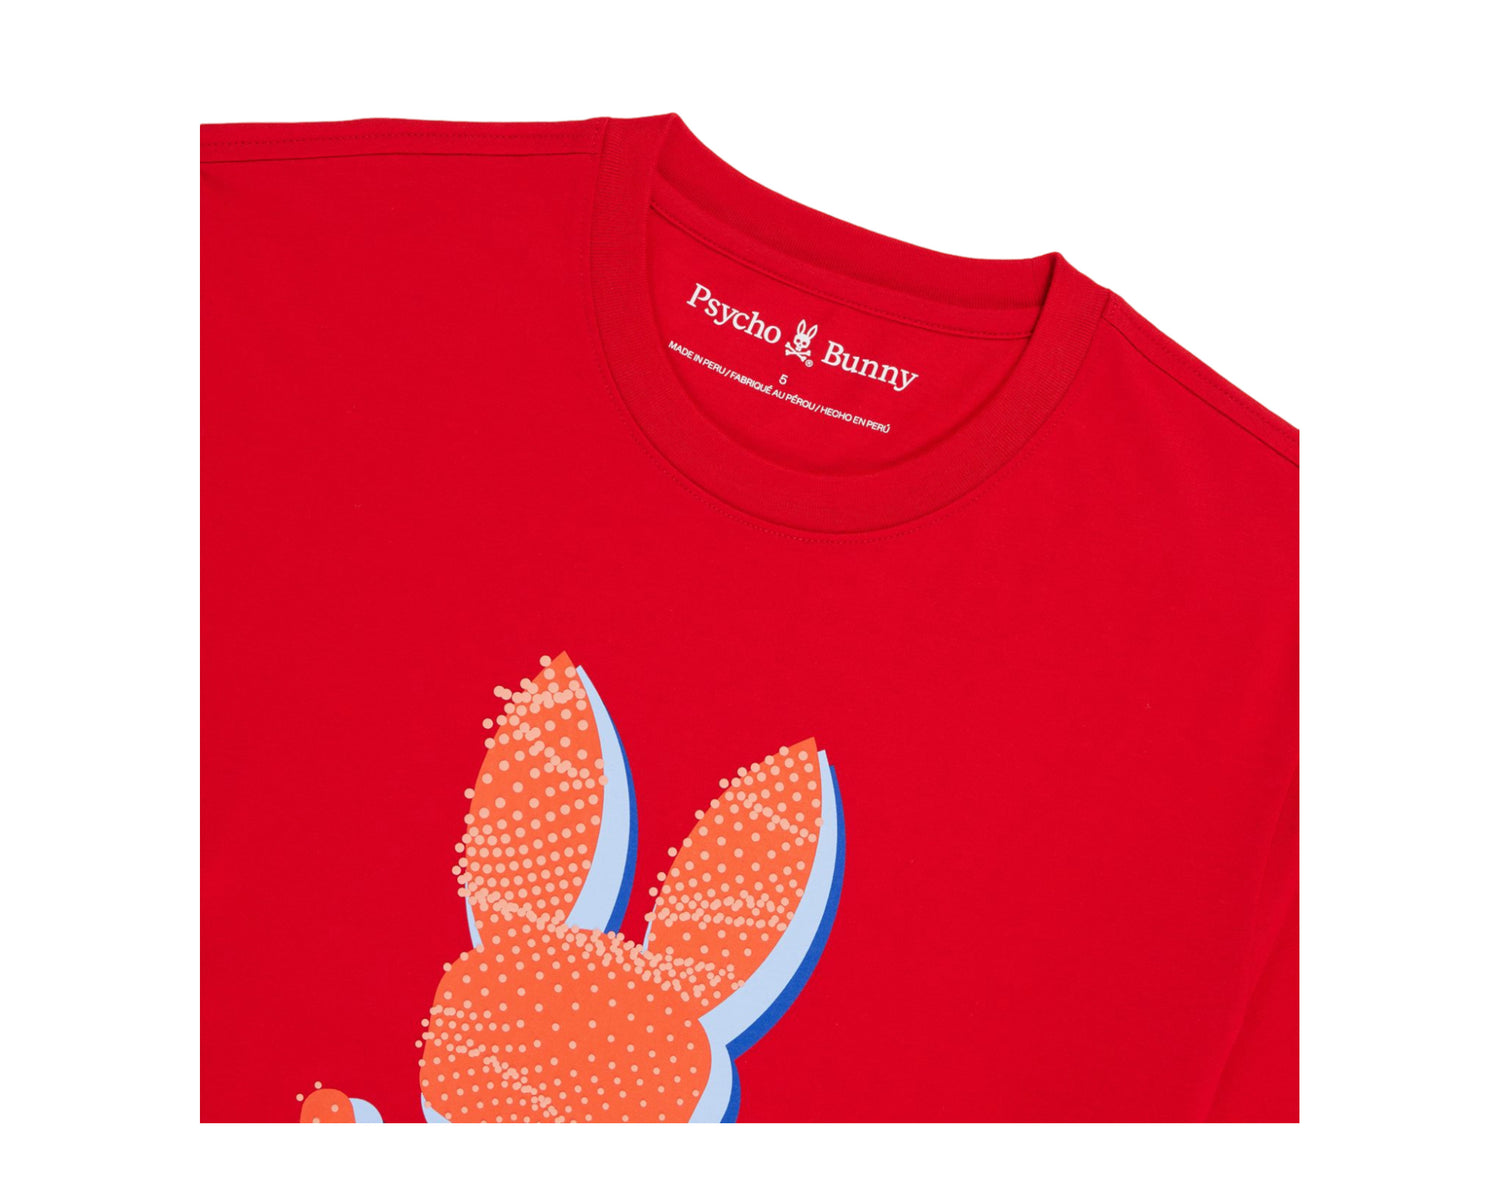 Psycho Bunny Elgin Graphic Puff Print Men's Tee Shirt